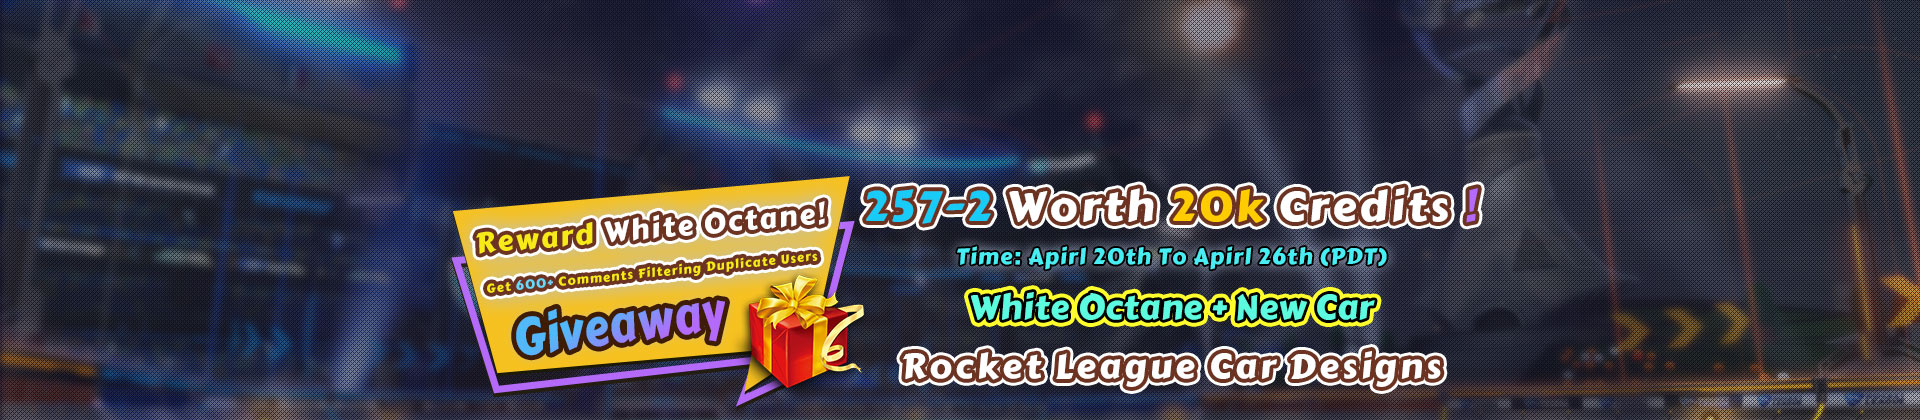 Rocket League Items Giveaway 257-2